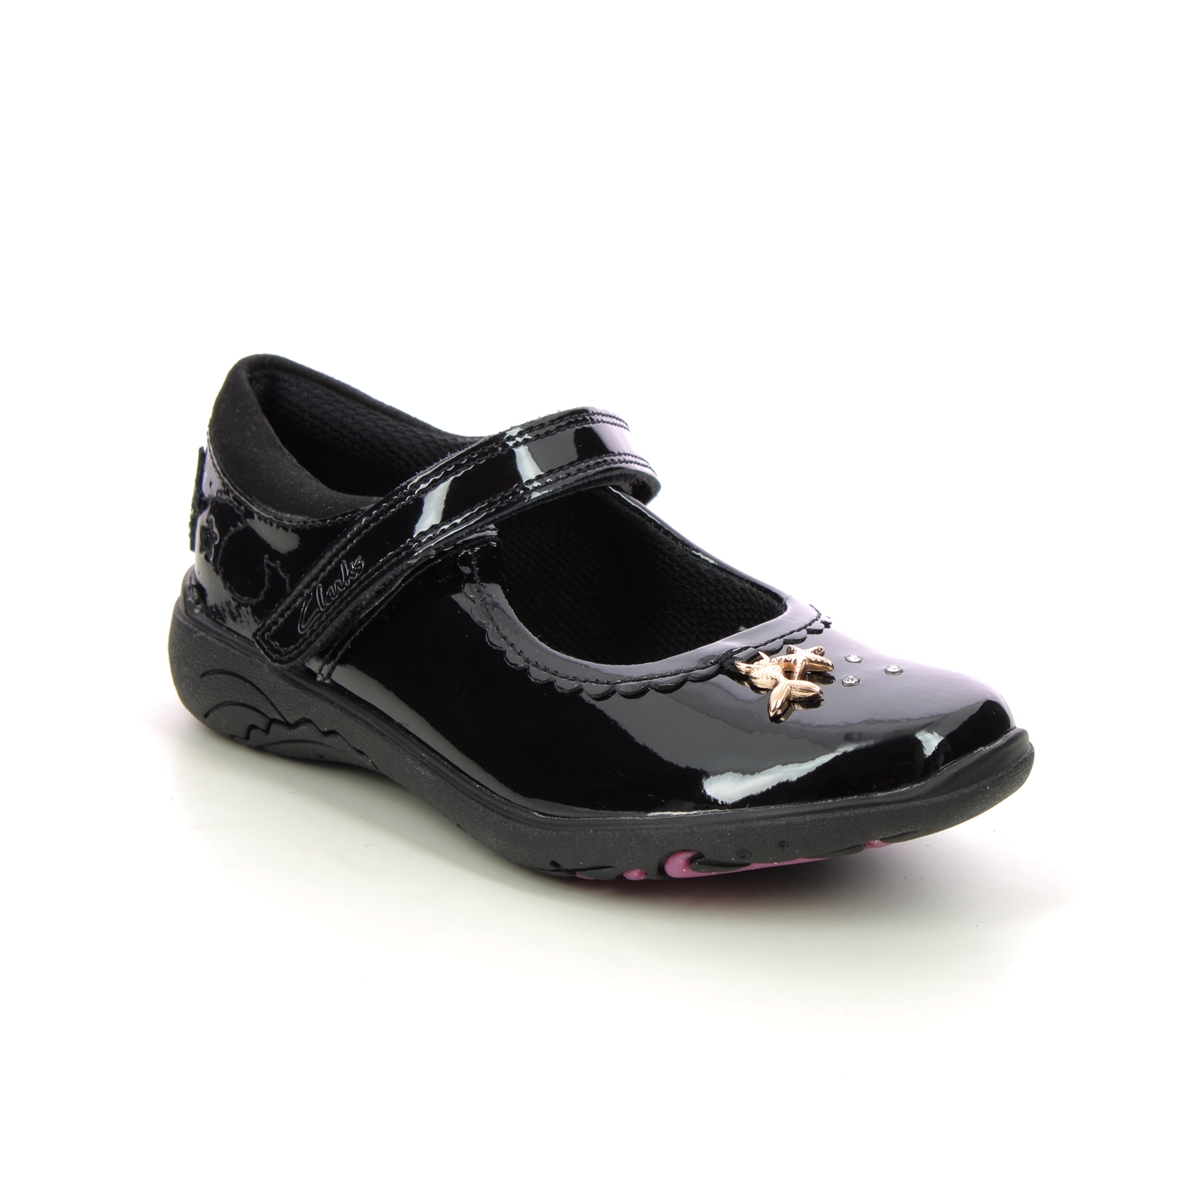 Clarks Relda Sea K Mary Jane Black Patent Kids Girls School Shoes 722417G In Size 10 In Plain Black Patent G Width Fitting For School For kids